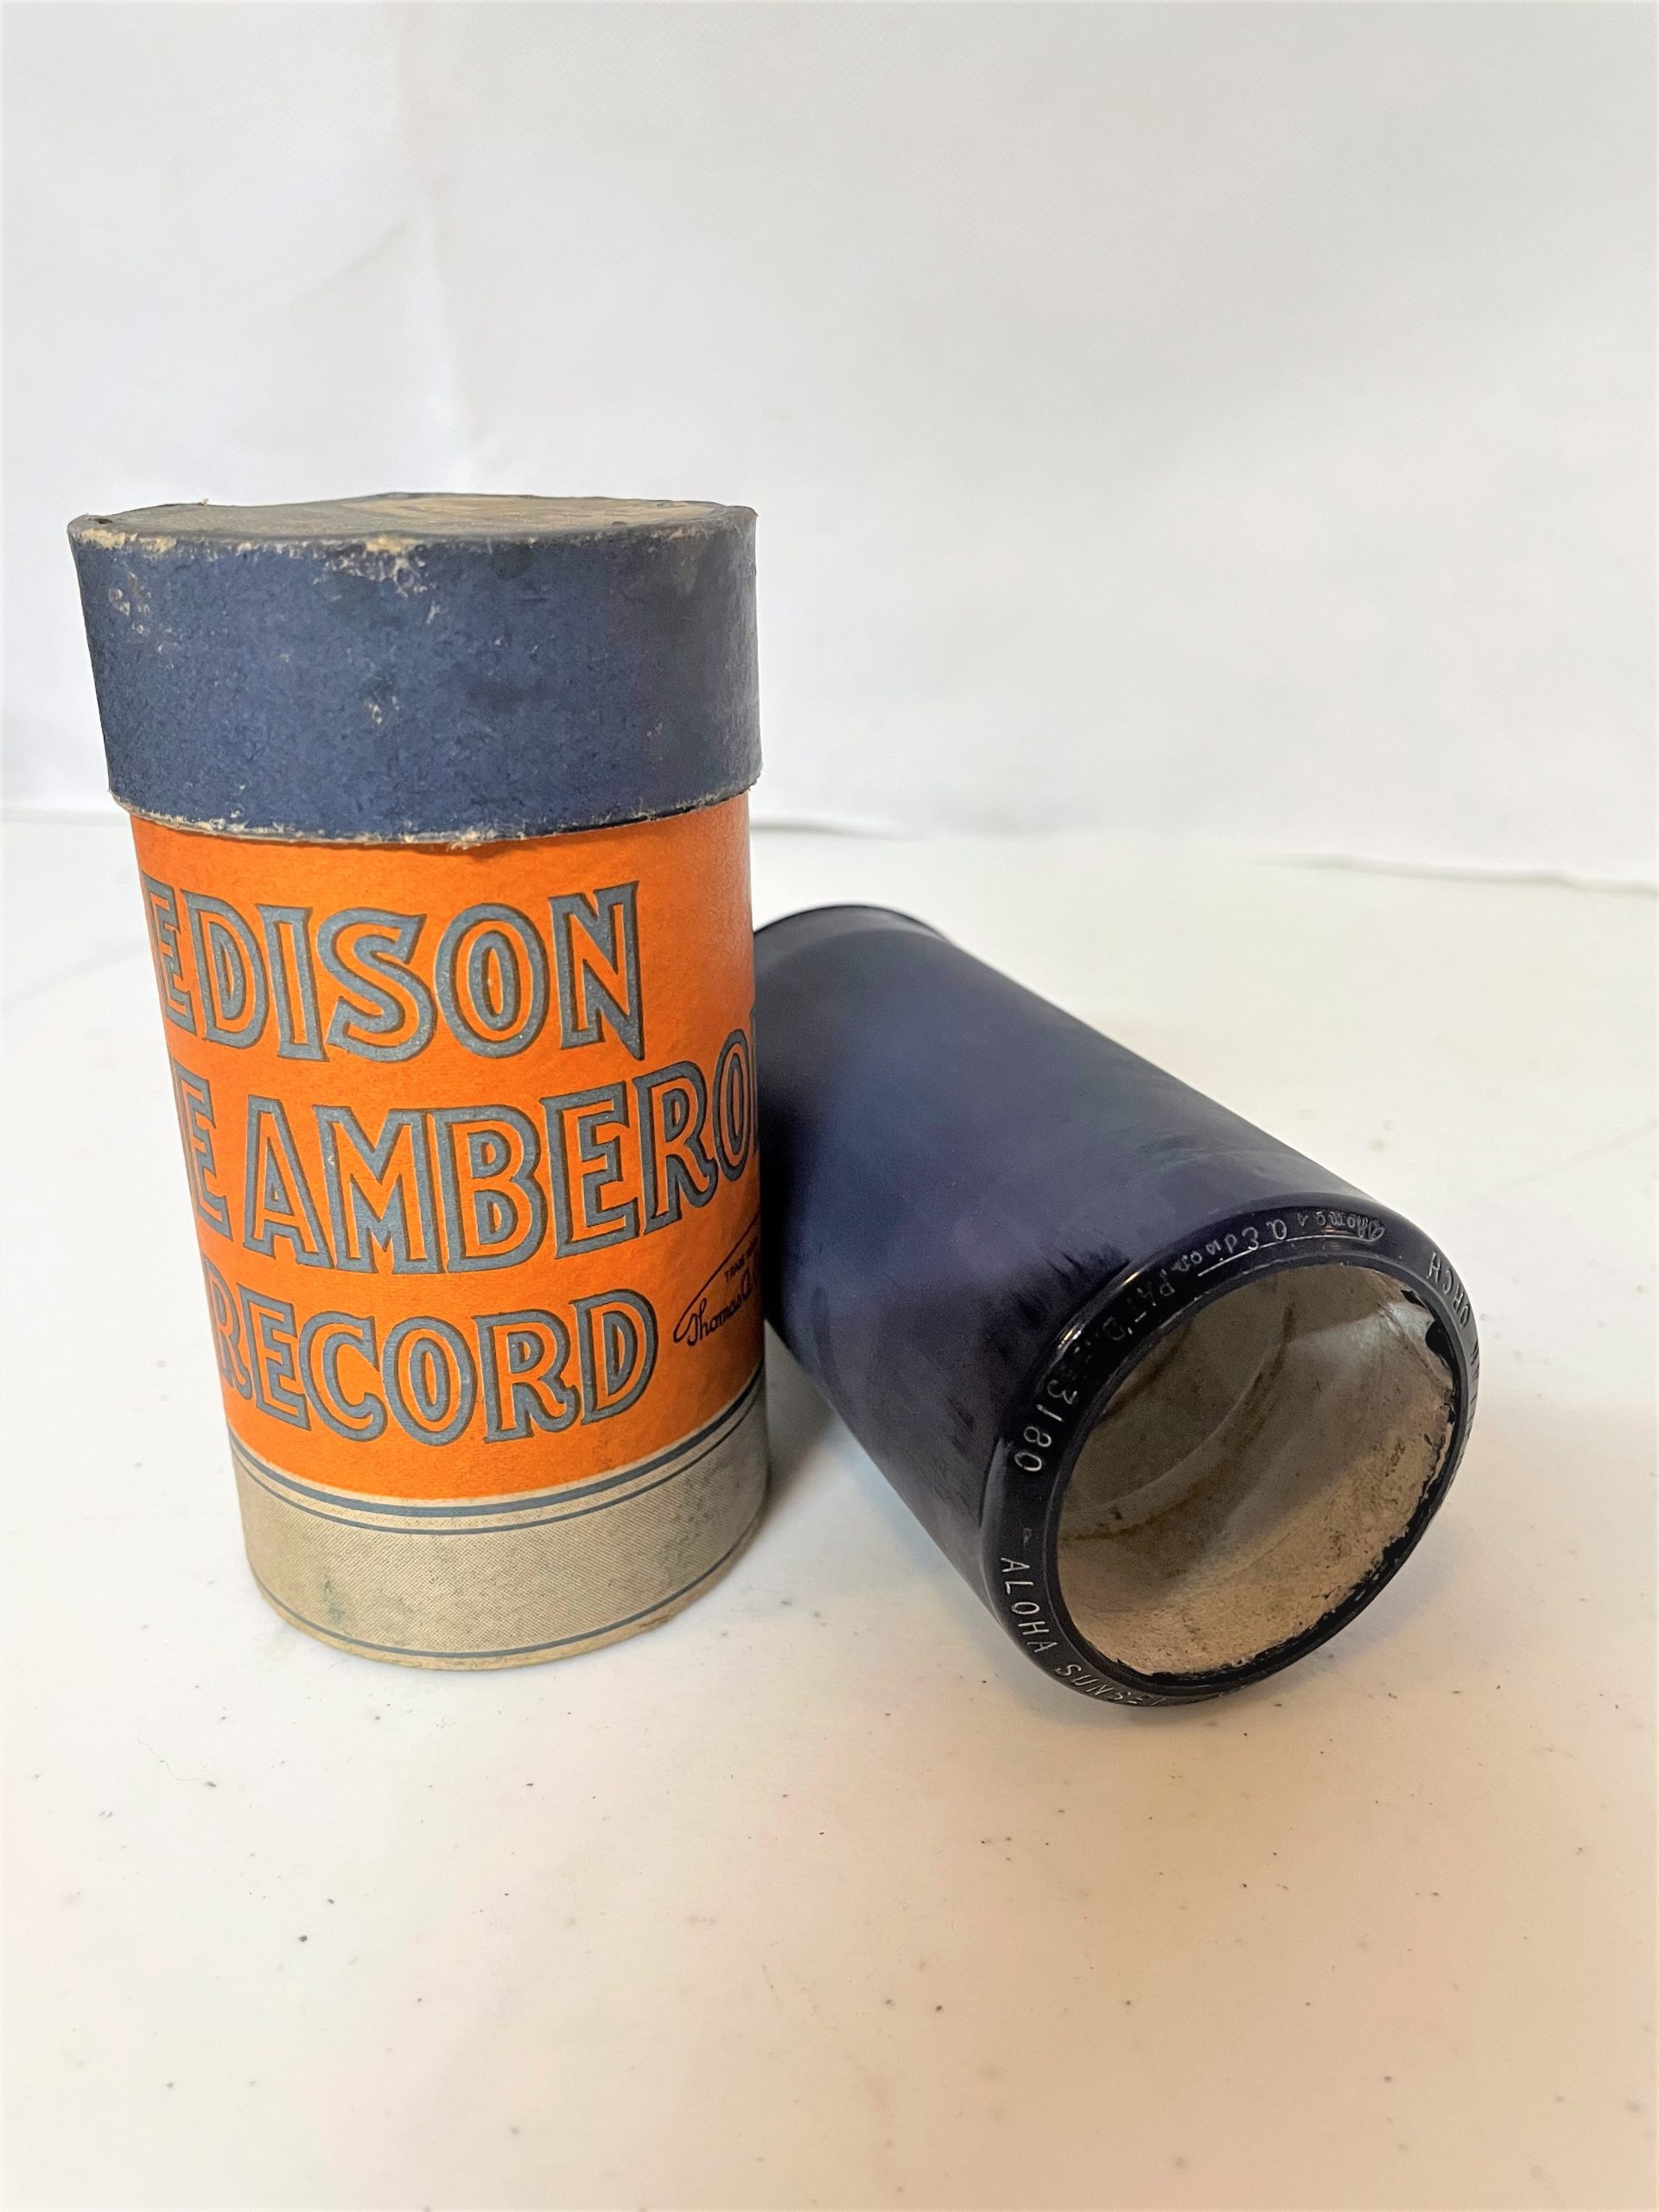 Edison 4 minute cylinder… “Rebecca of Sunnybrook Farm”